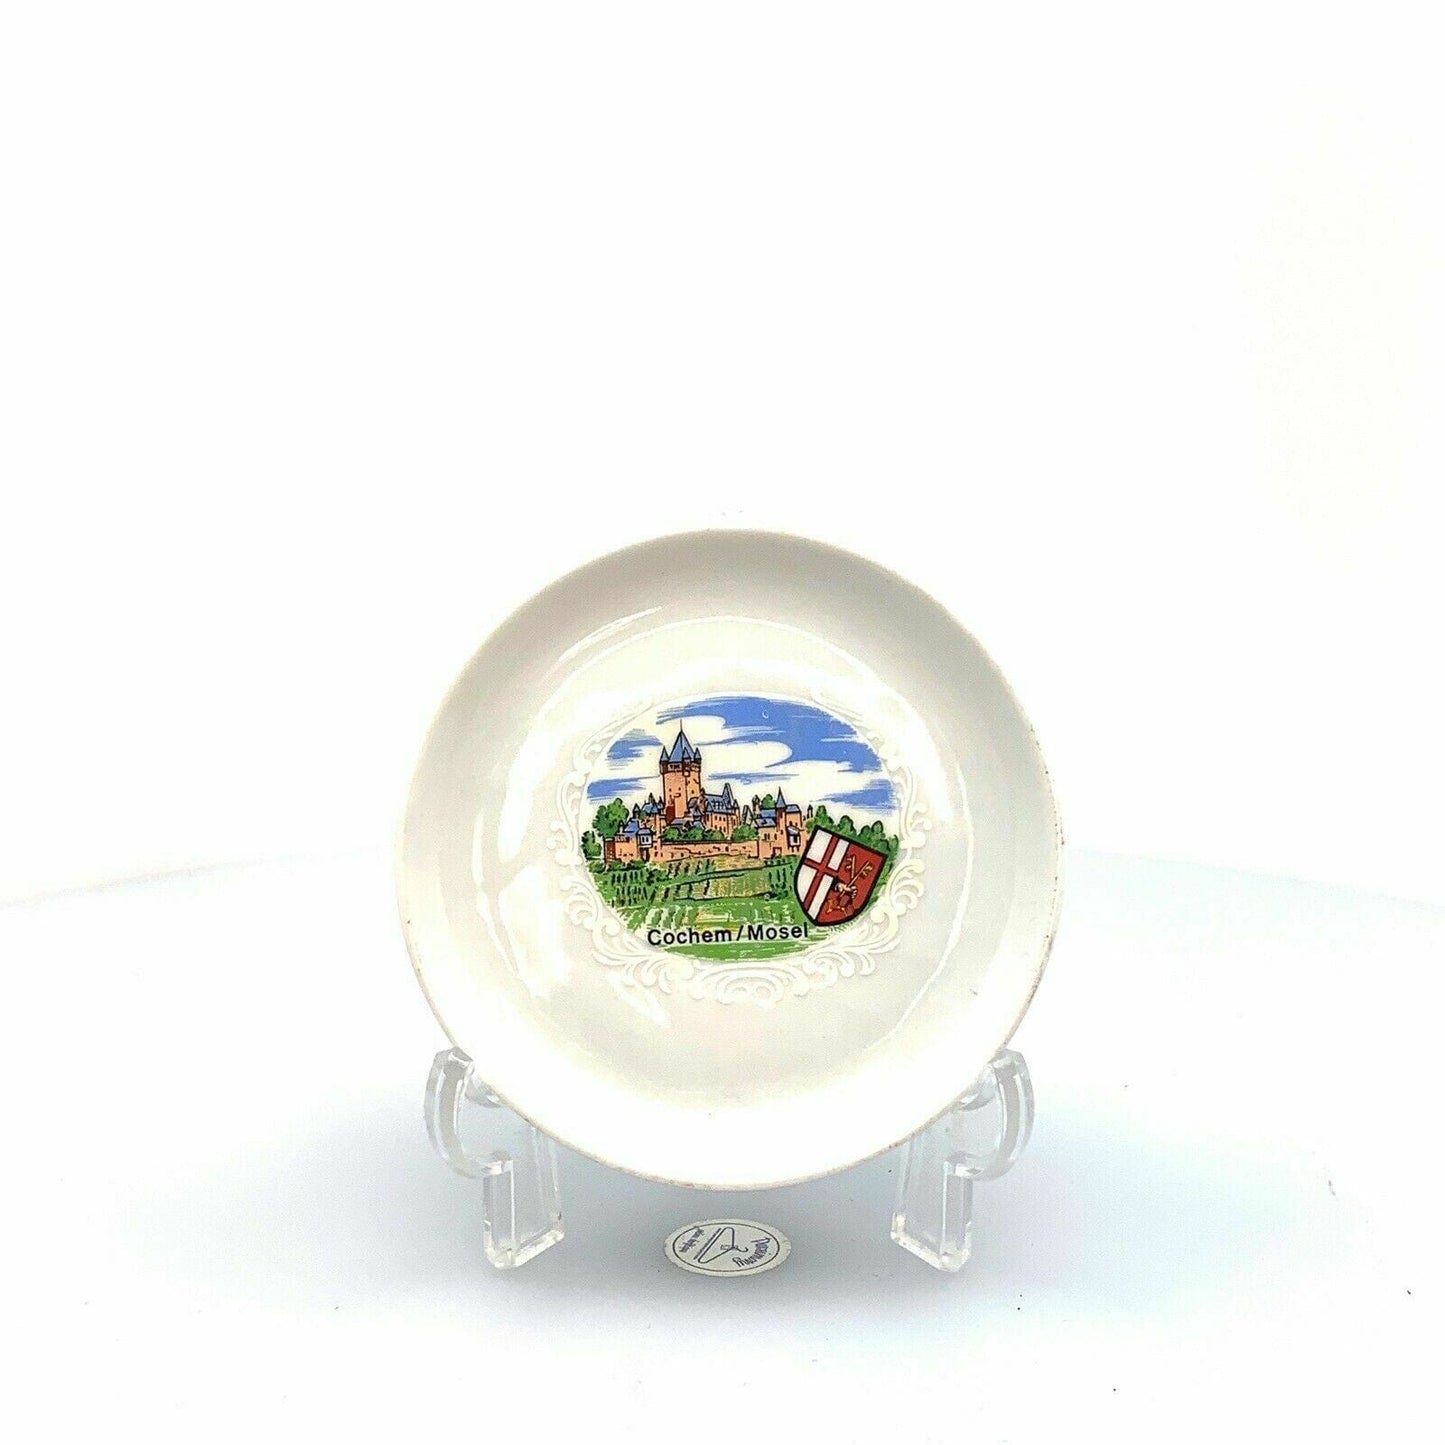 Exquisite Cochem Mosel Castle Souvenir Porcelain Teabag Plate - Vintage-inspired - White - 3" - Very Good Condition